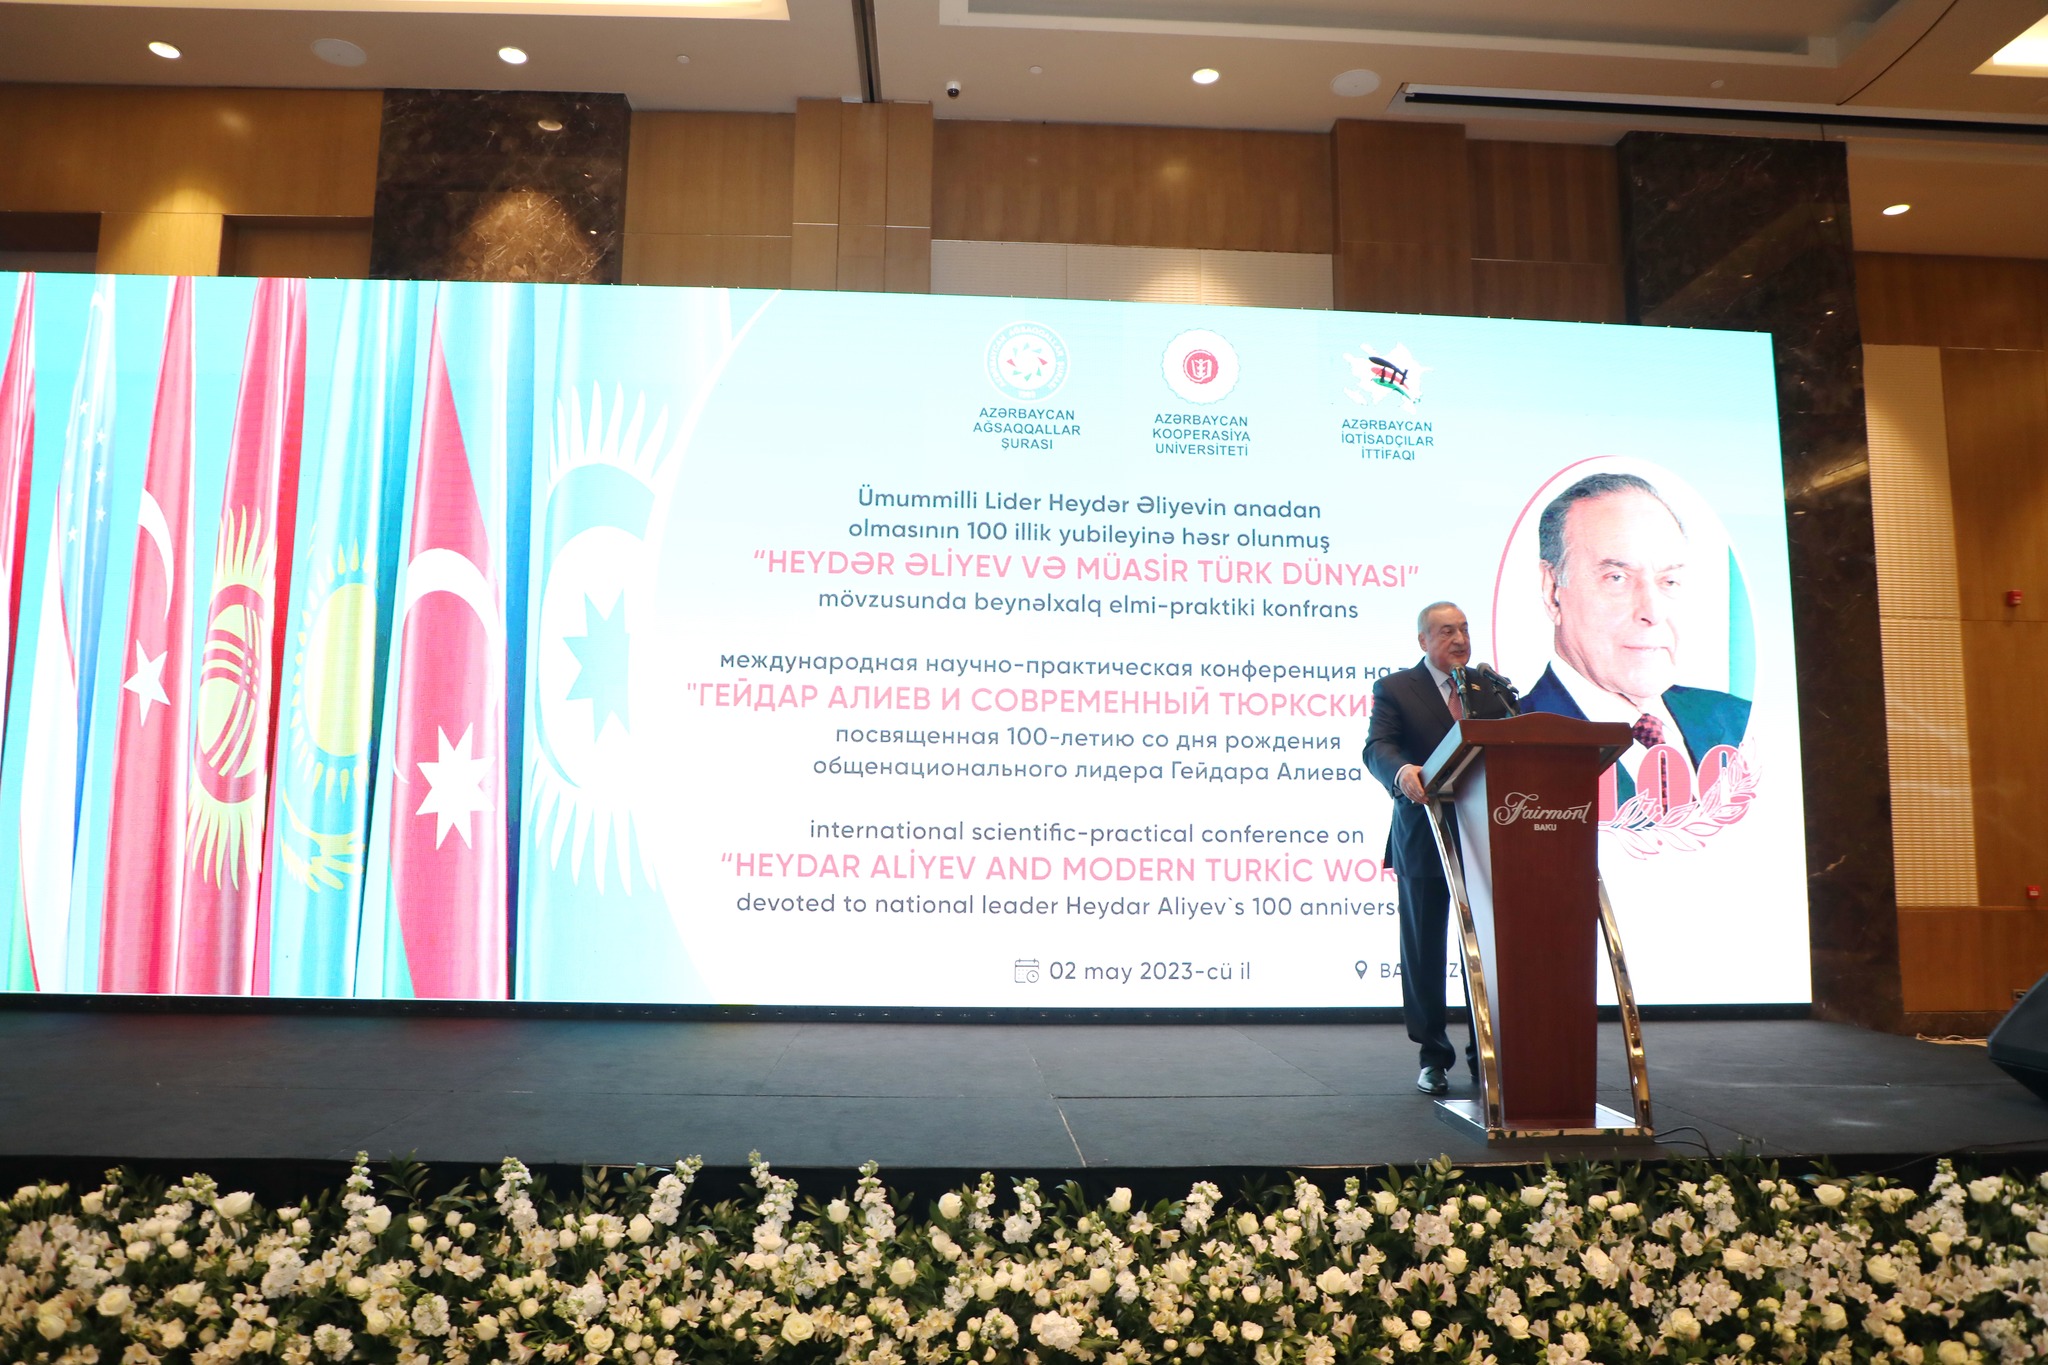 International scientific-practical conference on “Heydar Aliyev and the modern Turkish world”.